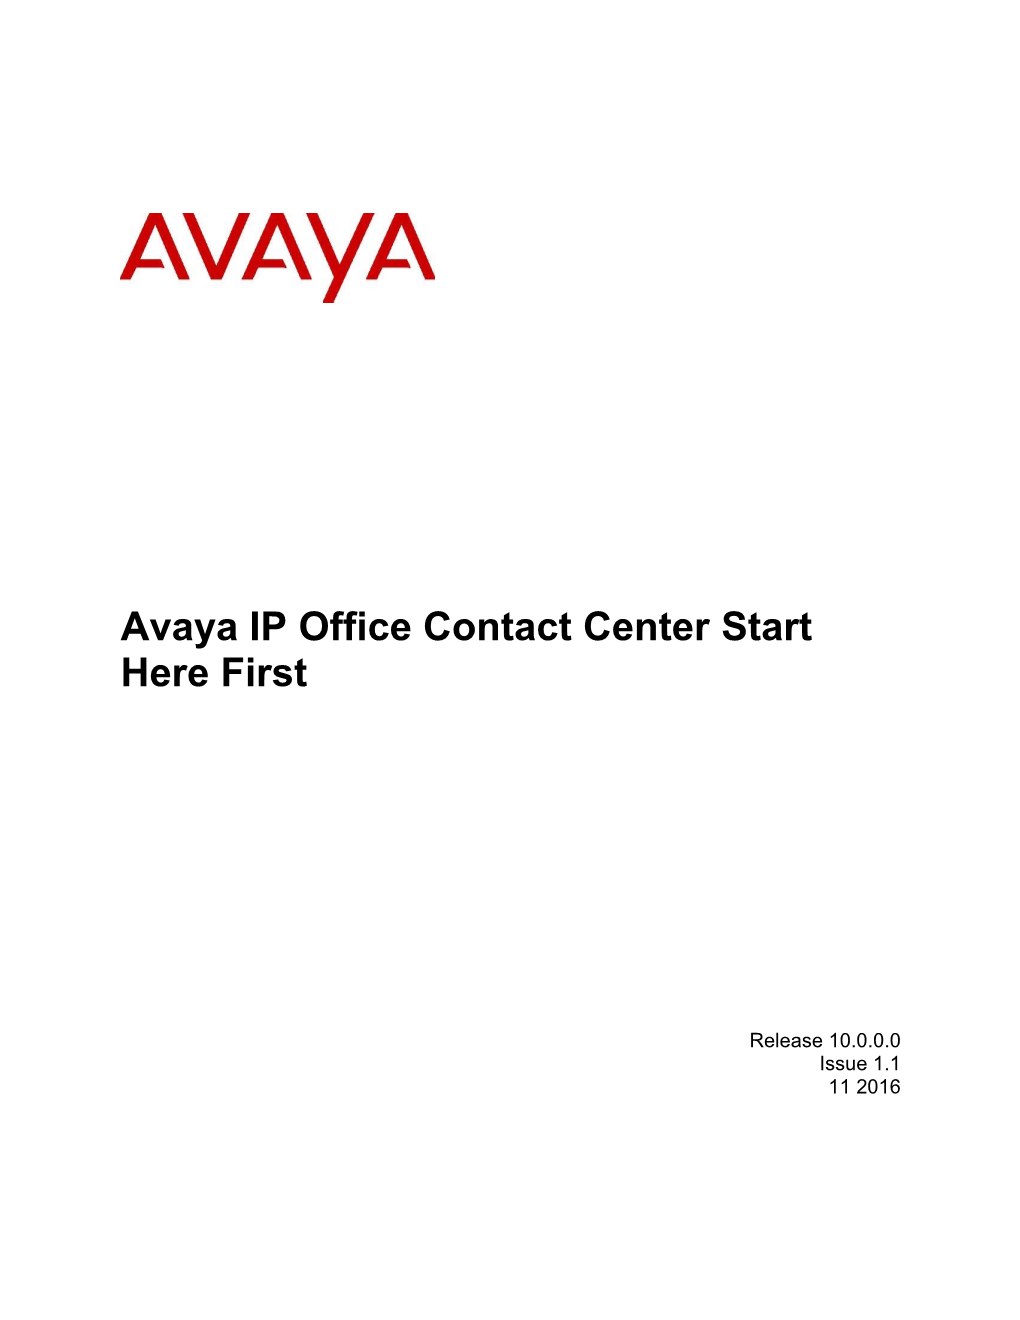 Avaya IP Office Contact Center Start Here First